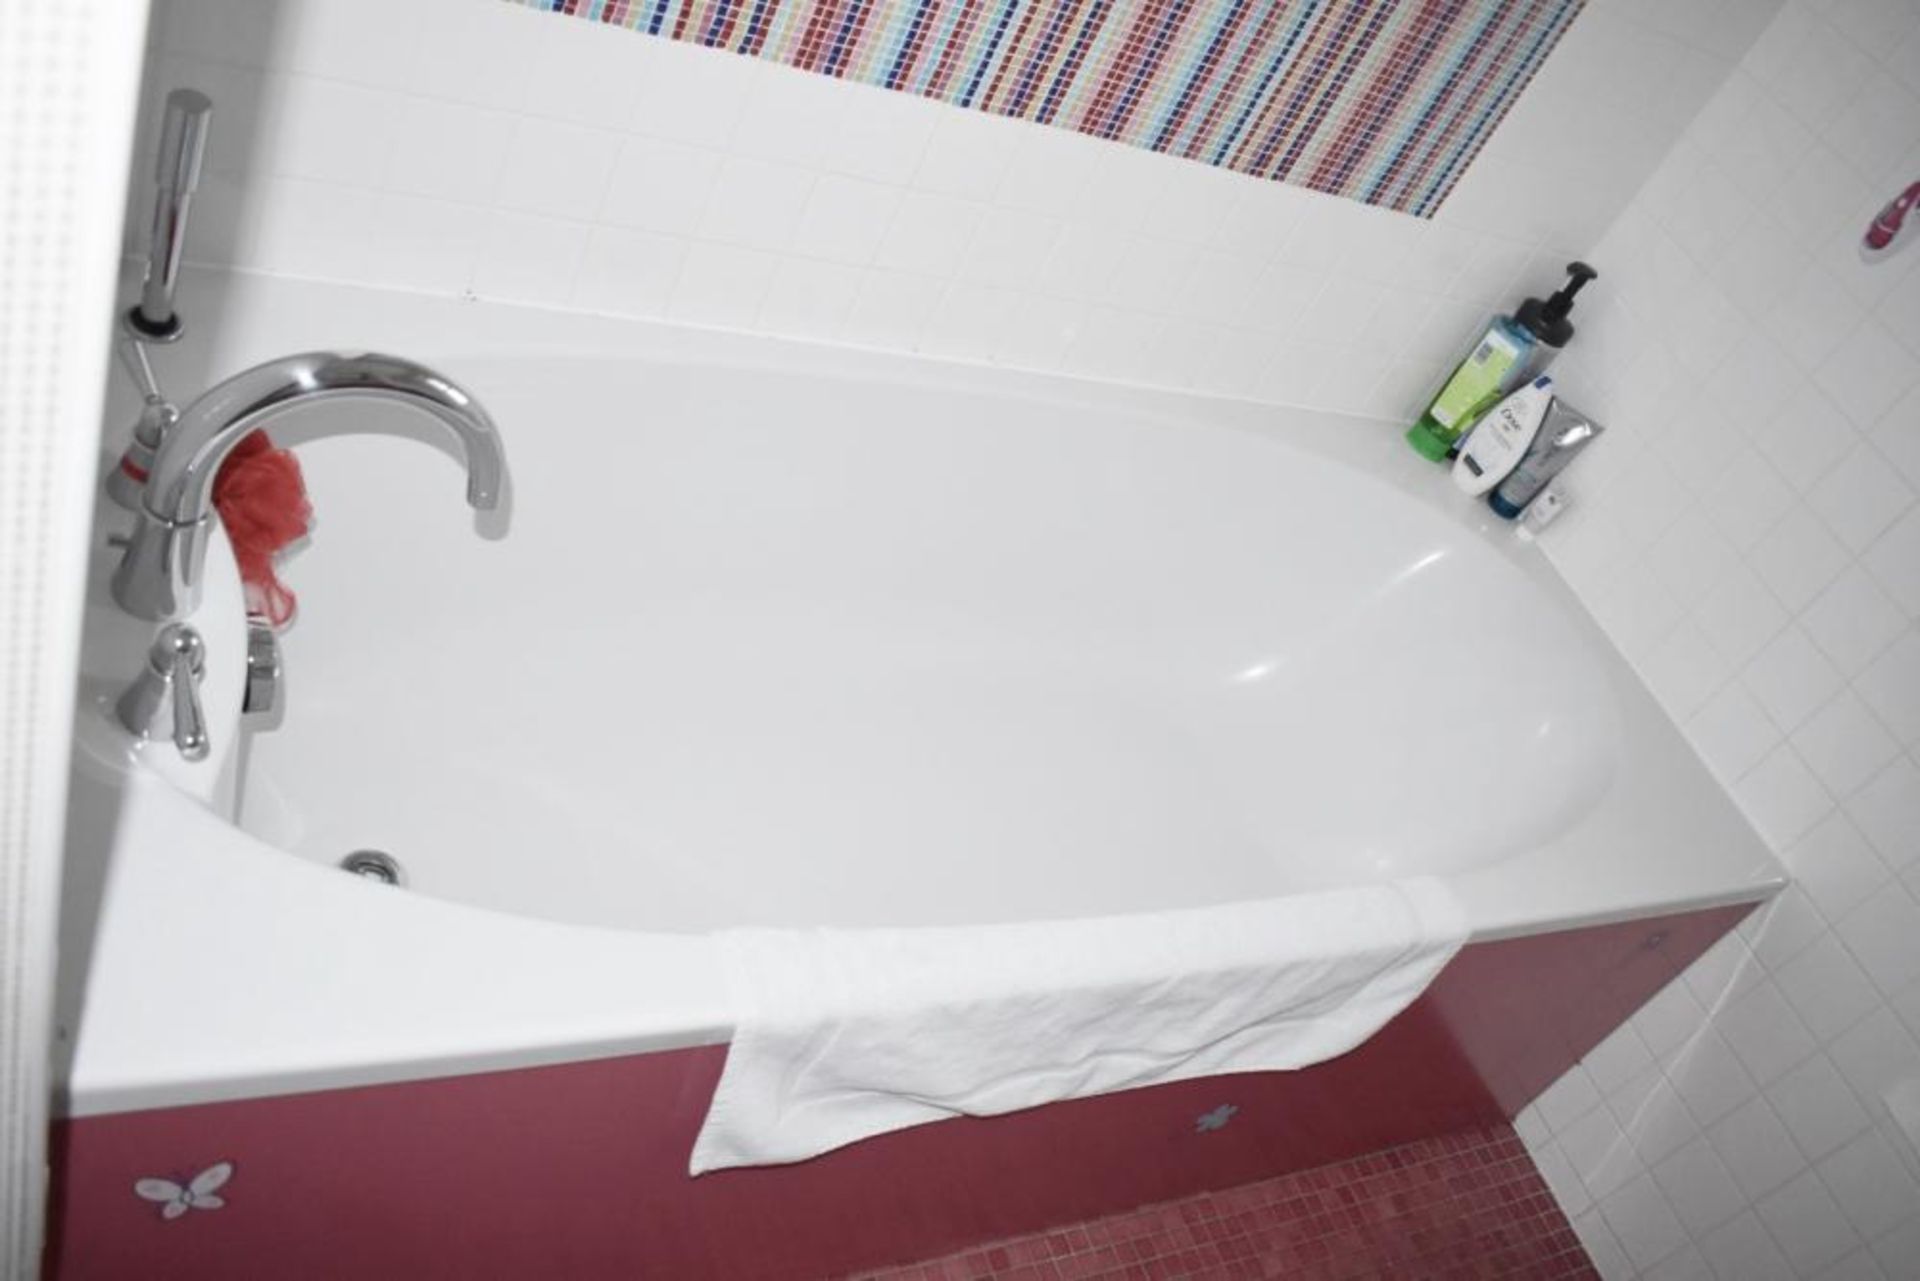 Contents Of Bathroom Inc. Bath, Toilet And Sink - Ref: ABR070 / GR - CL491 *NO VAT* Location: Hale,